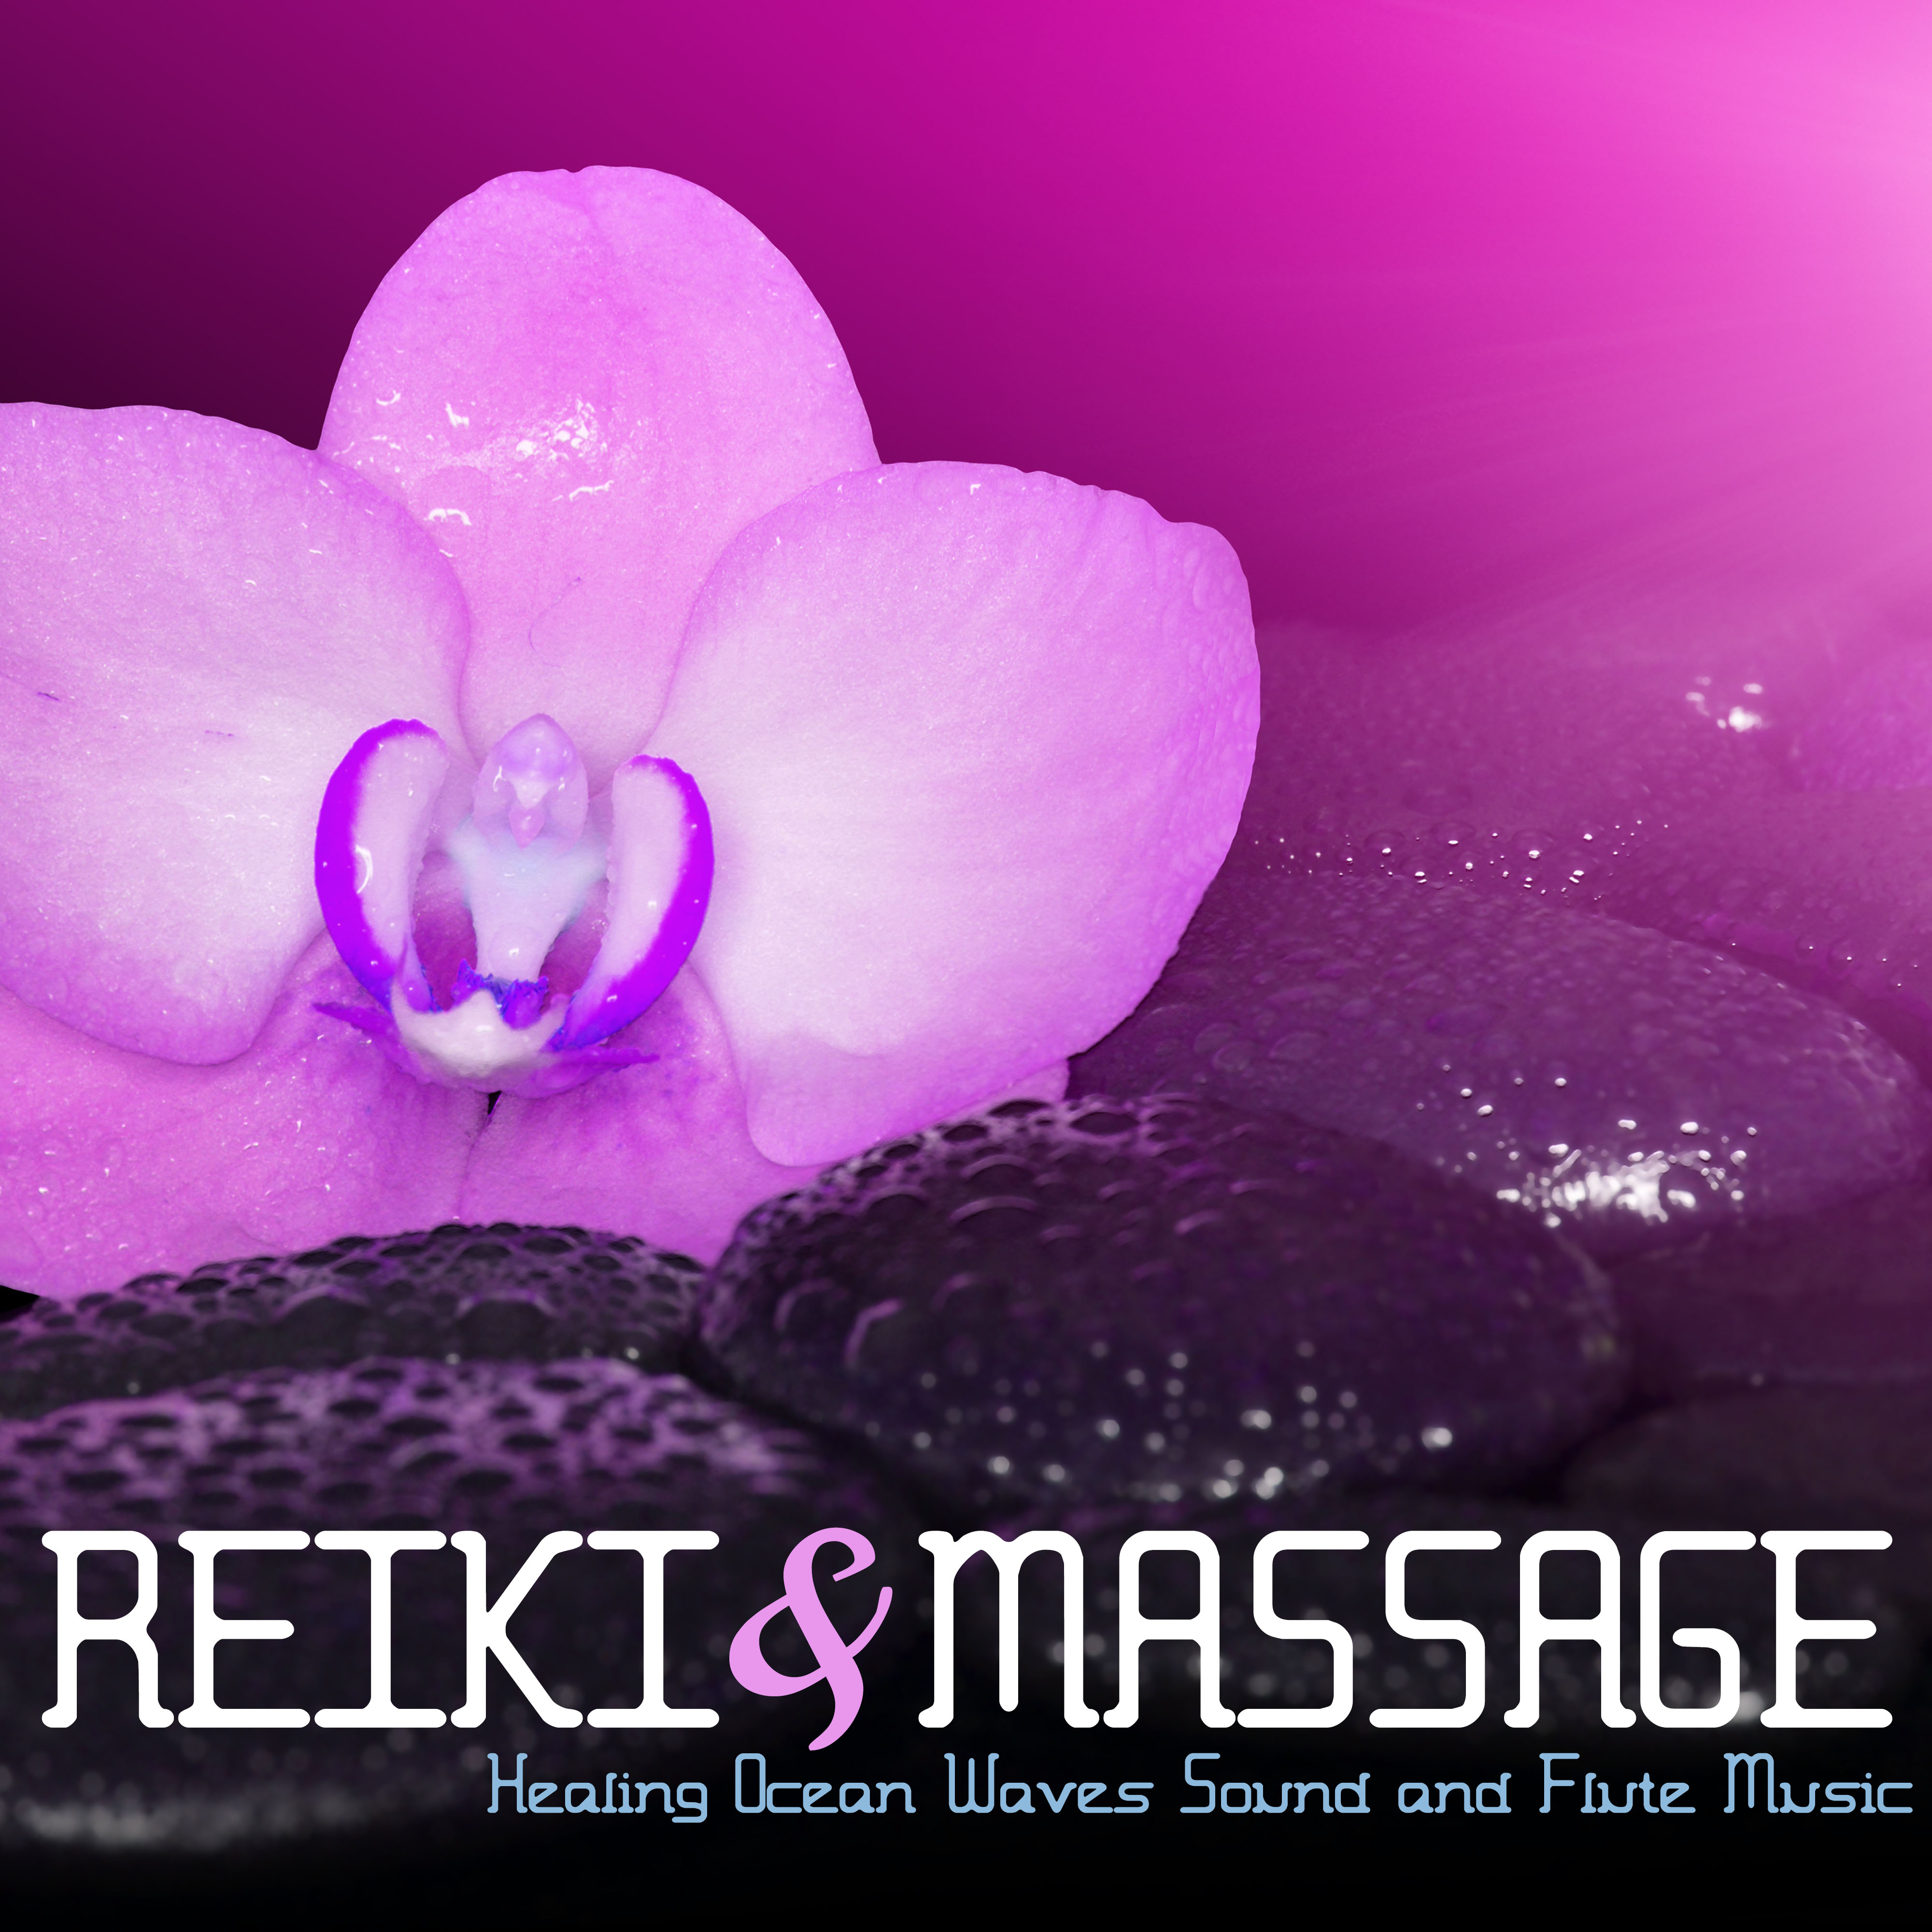 Reiki & Massage - Healing Ocean Waves Sound and Flute Music